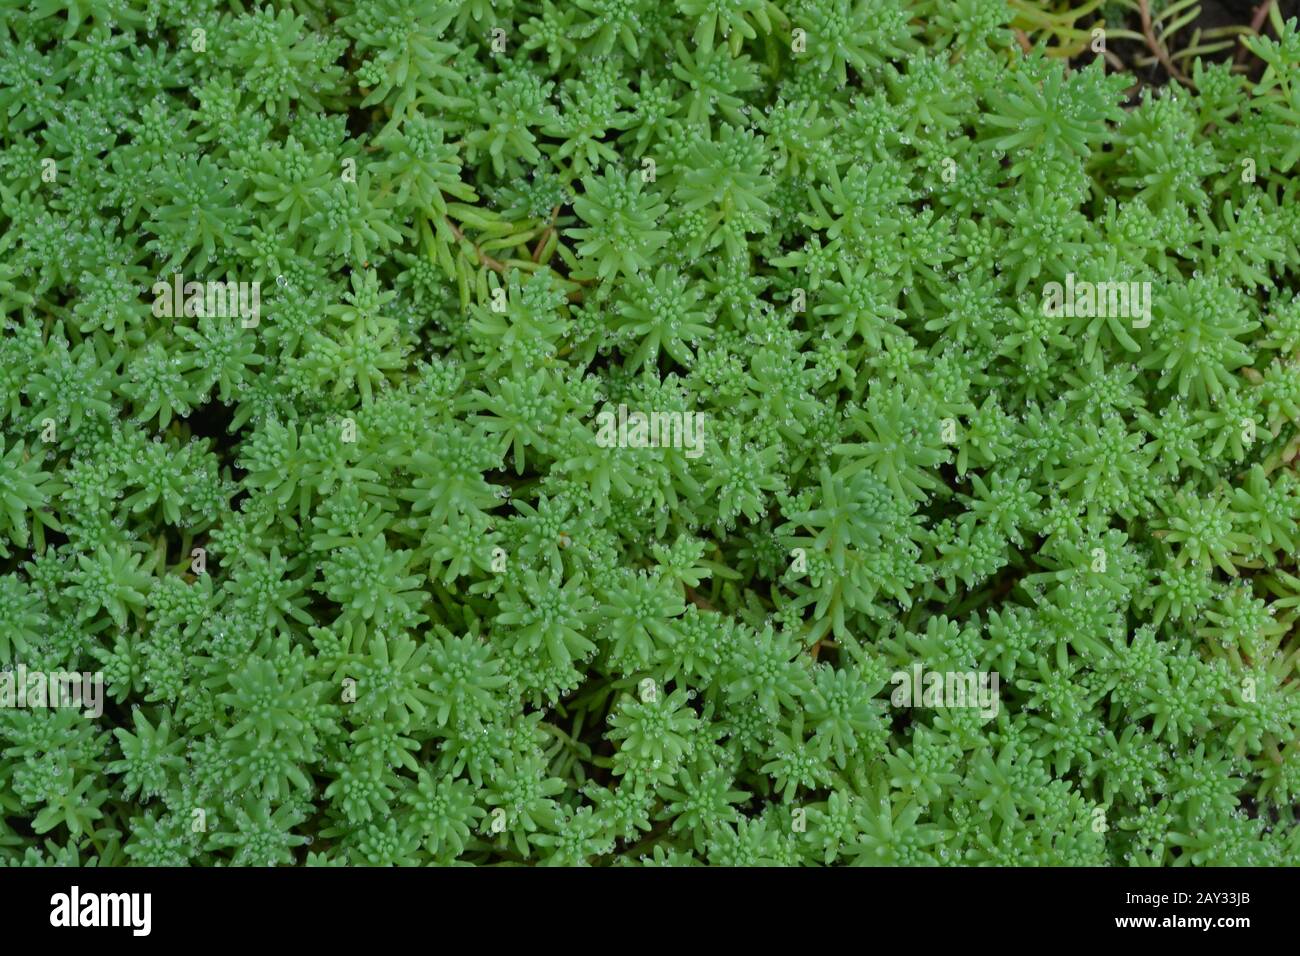 Stonecrop. Hare cabbage. Sedum. Green moss. Decorative grassy carpet. Flowerbed, garden. Close-up. Horizontal Stock Photo